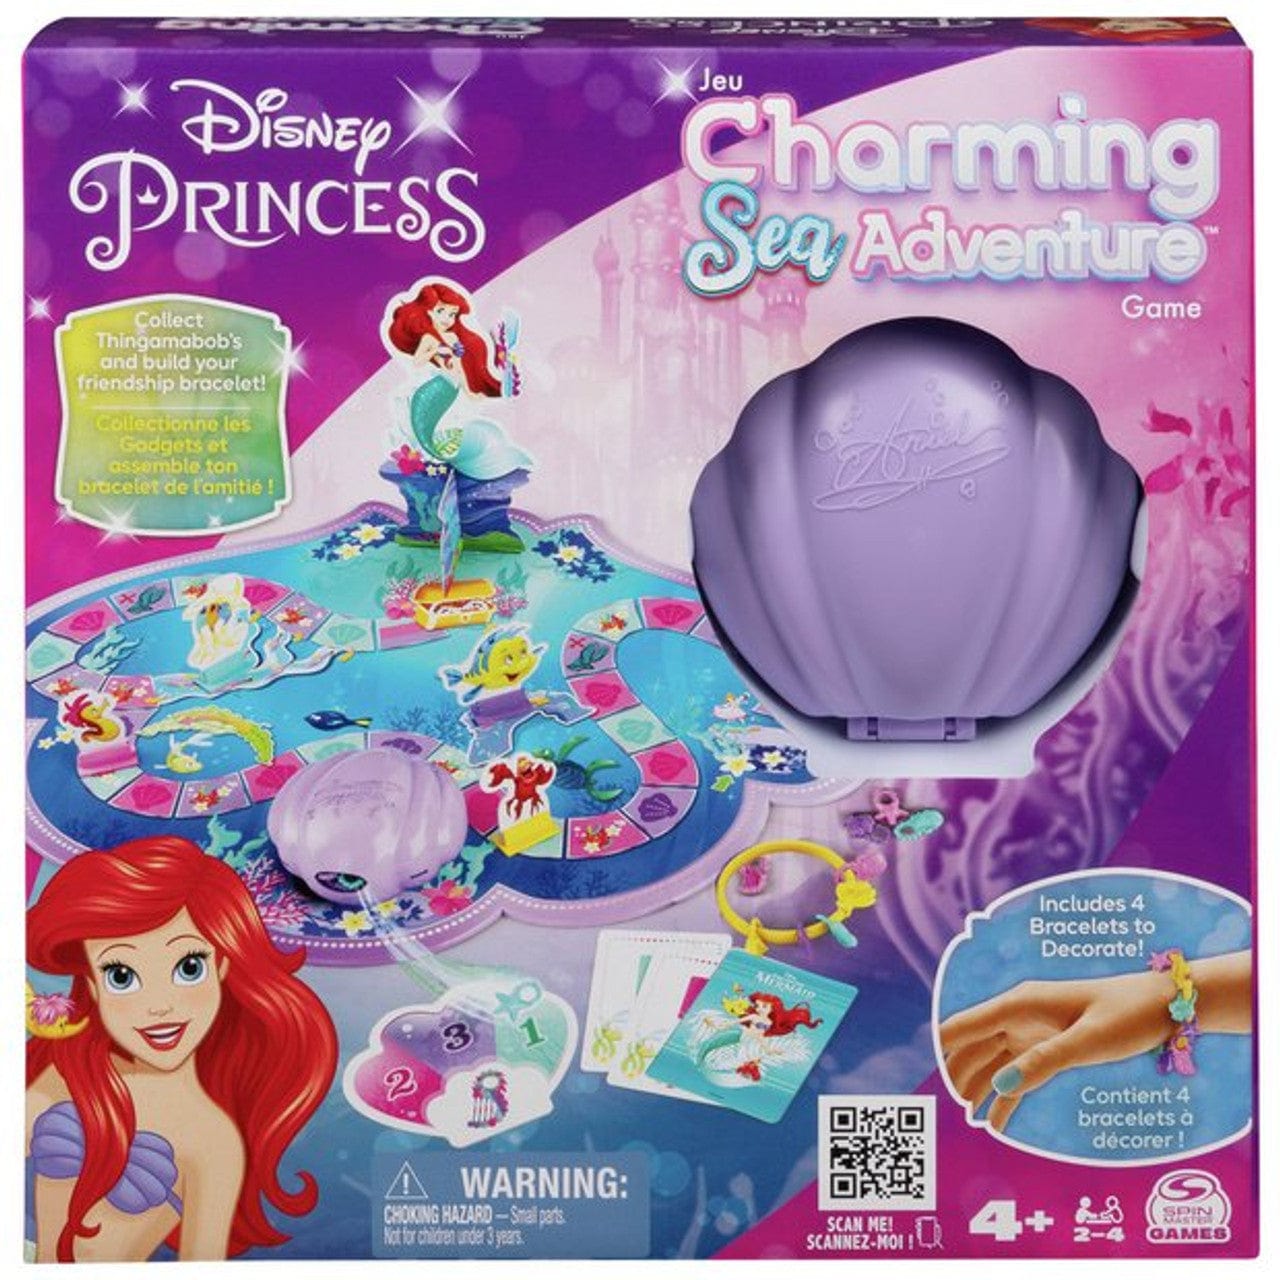 Disney Princess: Charming Sea Adventure